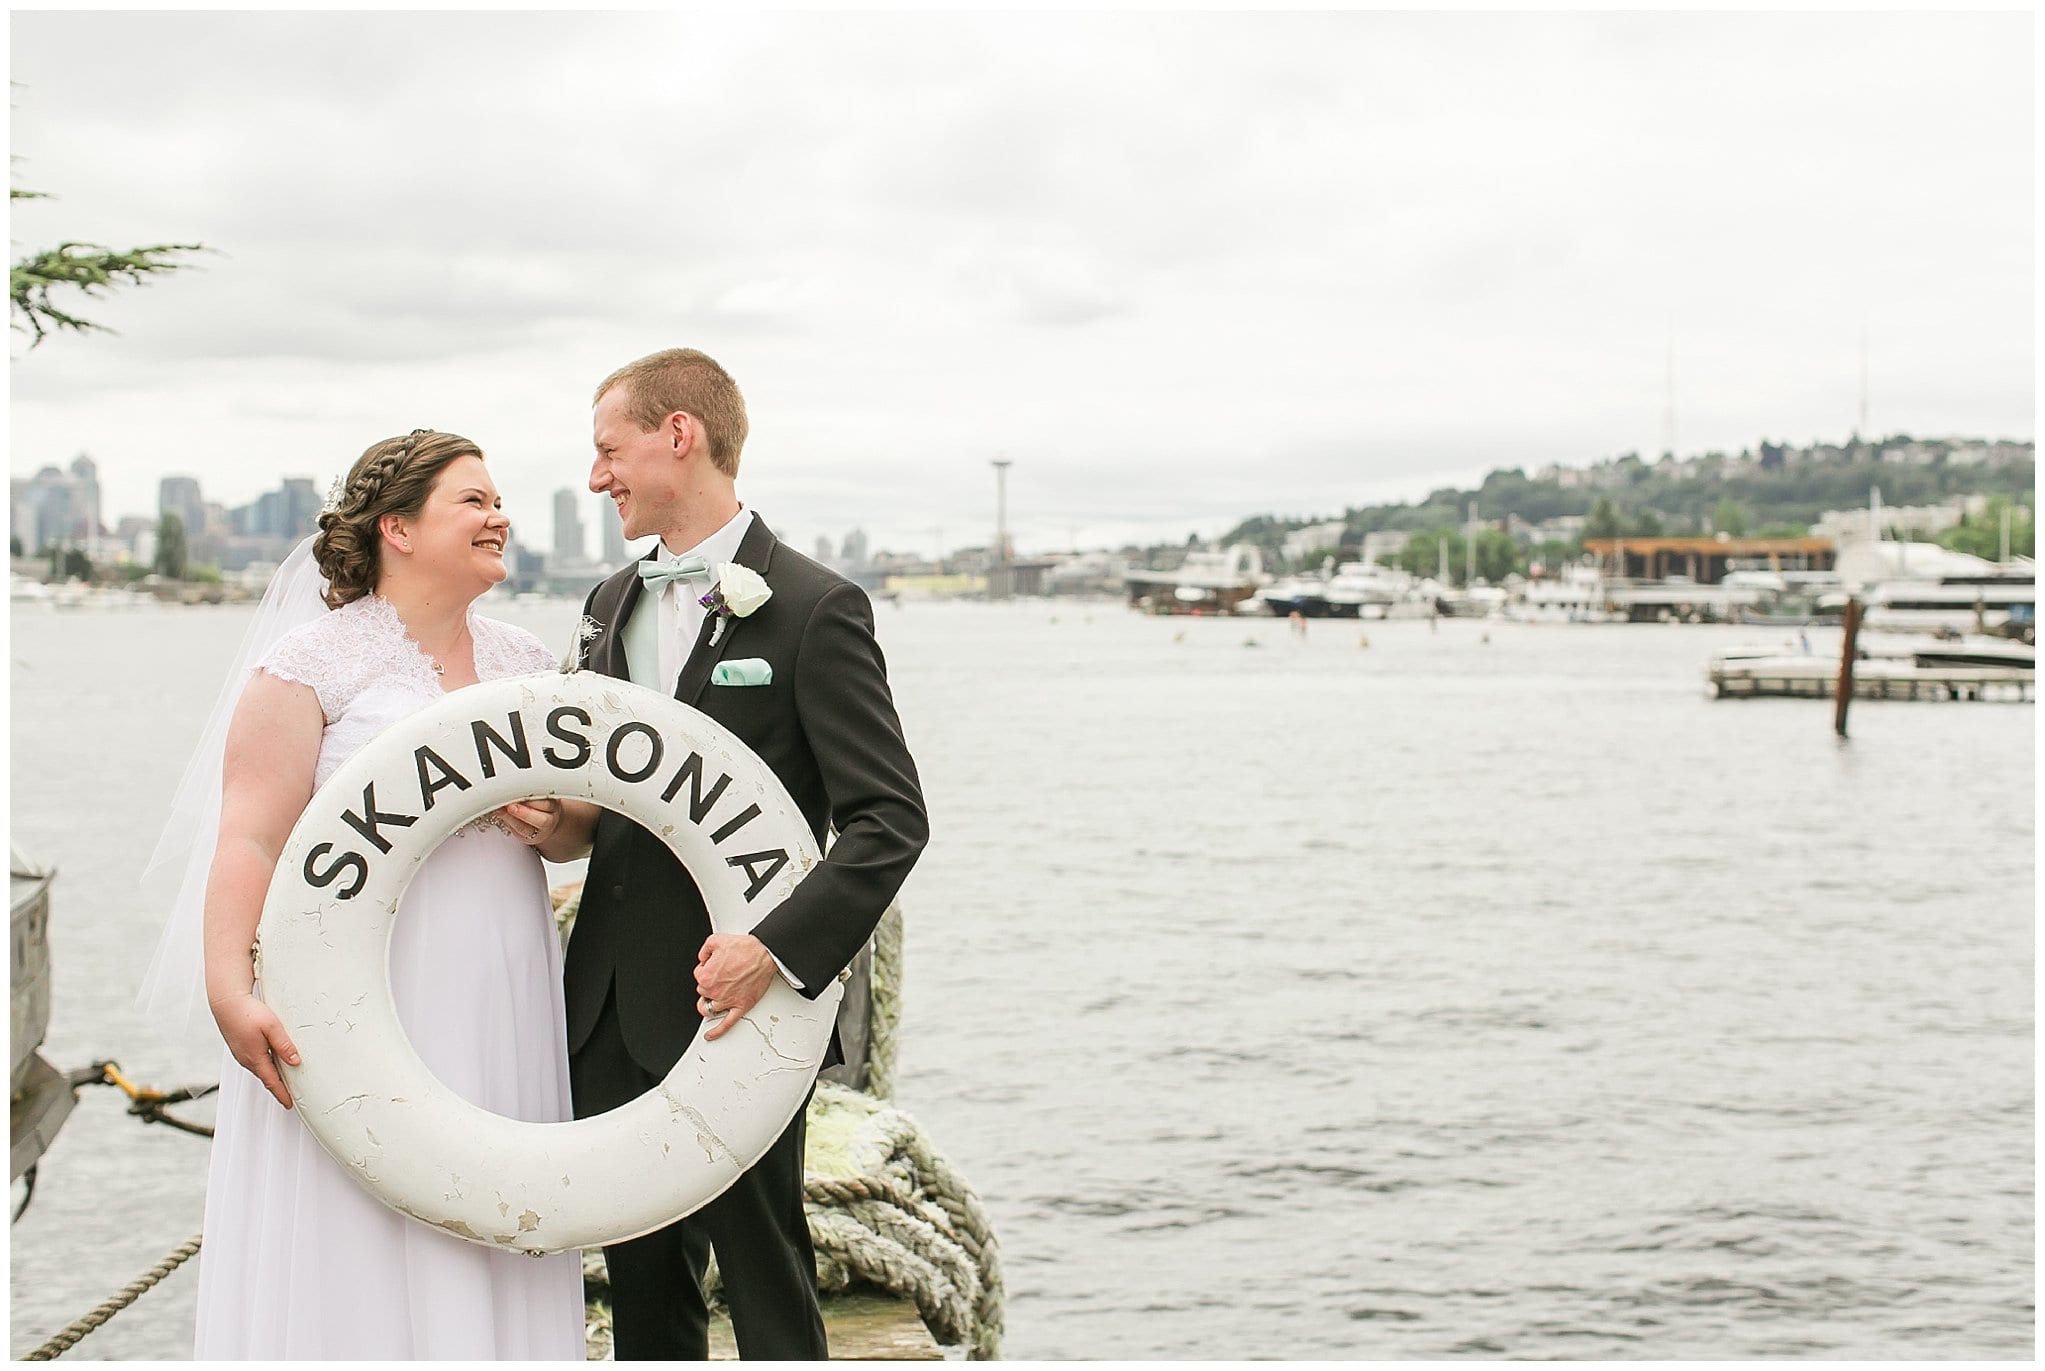 mv skansonia, mv skansonia wedding, mv skansonia photographer, skansonia, seattle waterfront wedding, seattle wedding